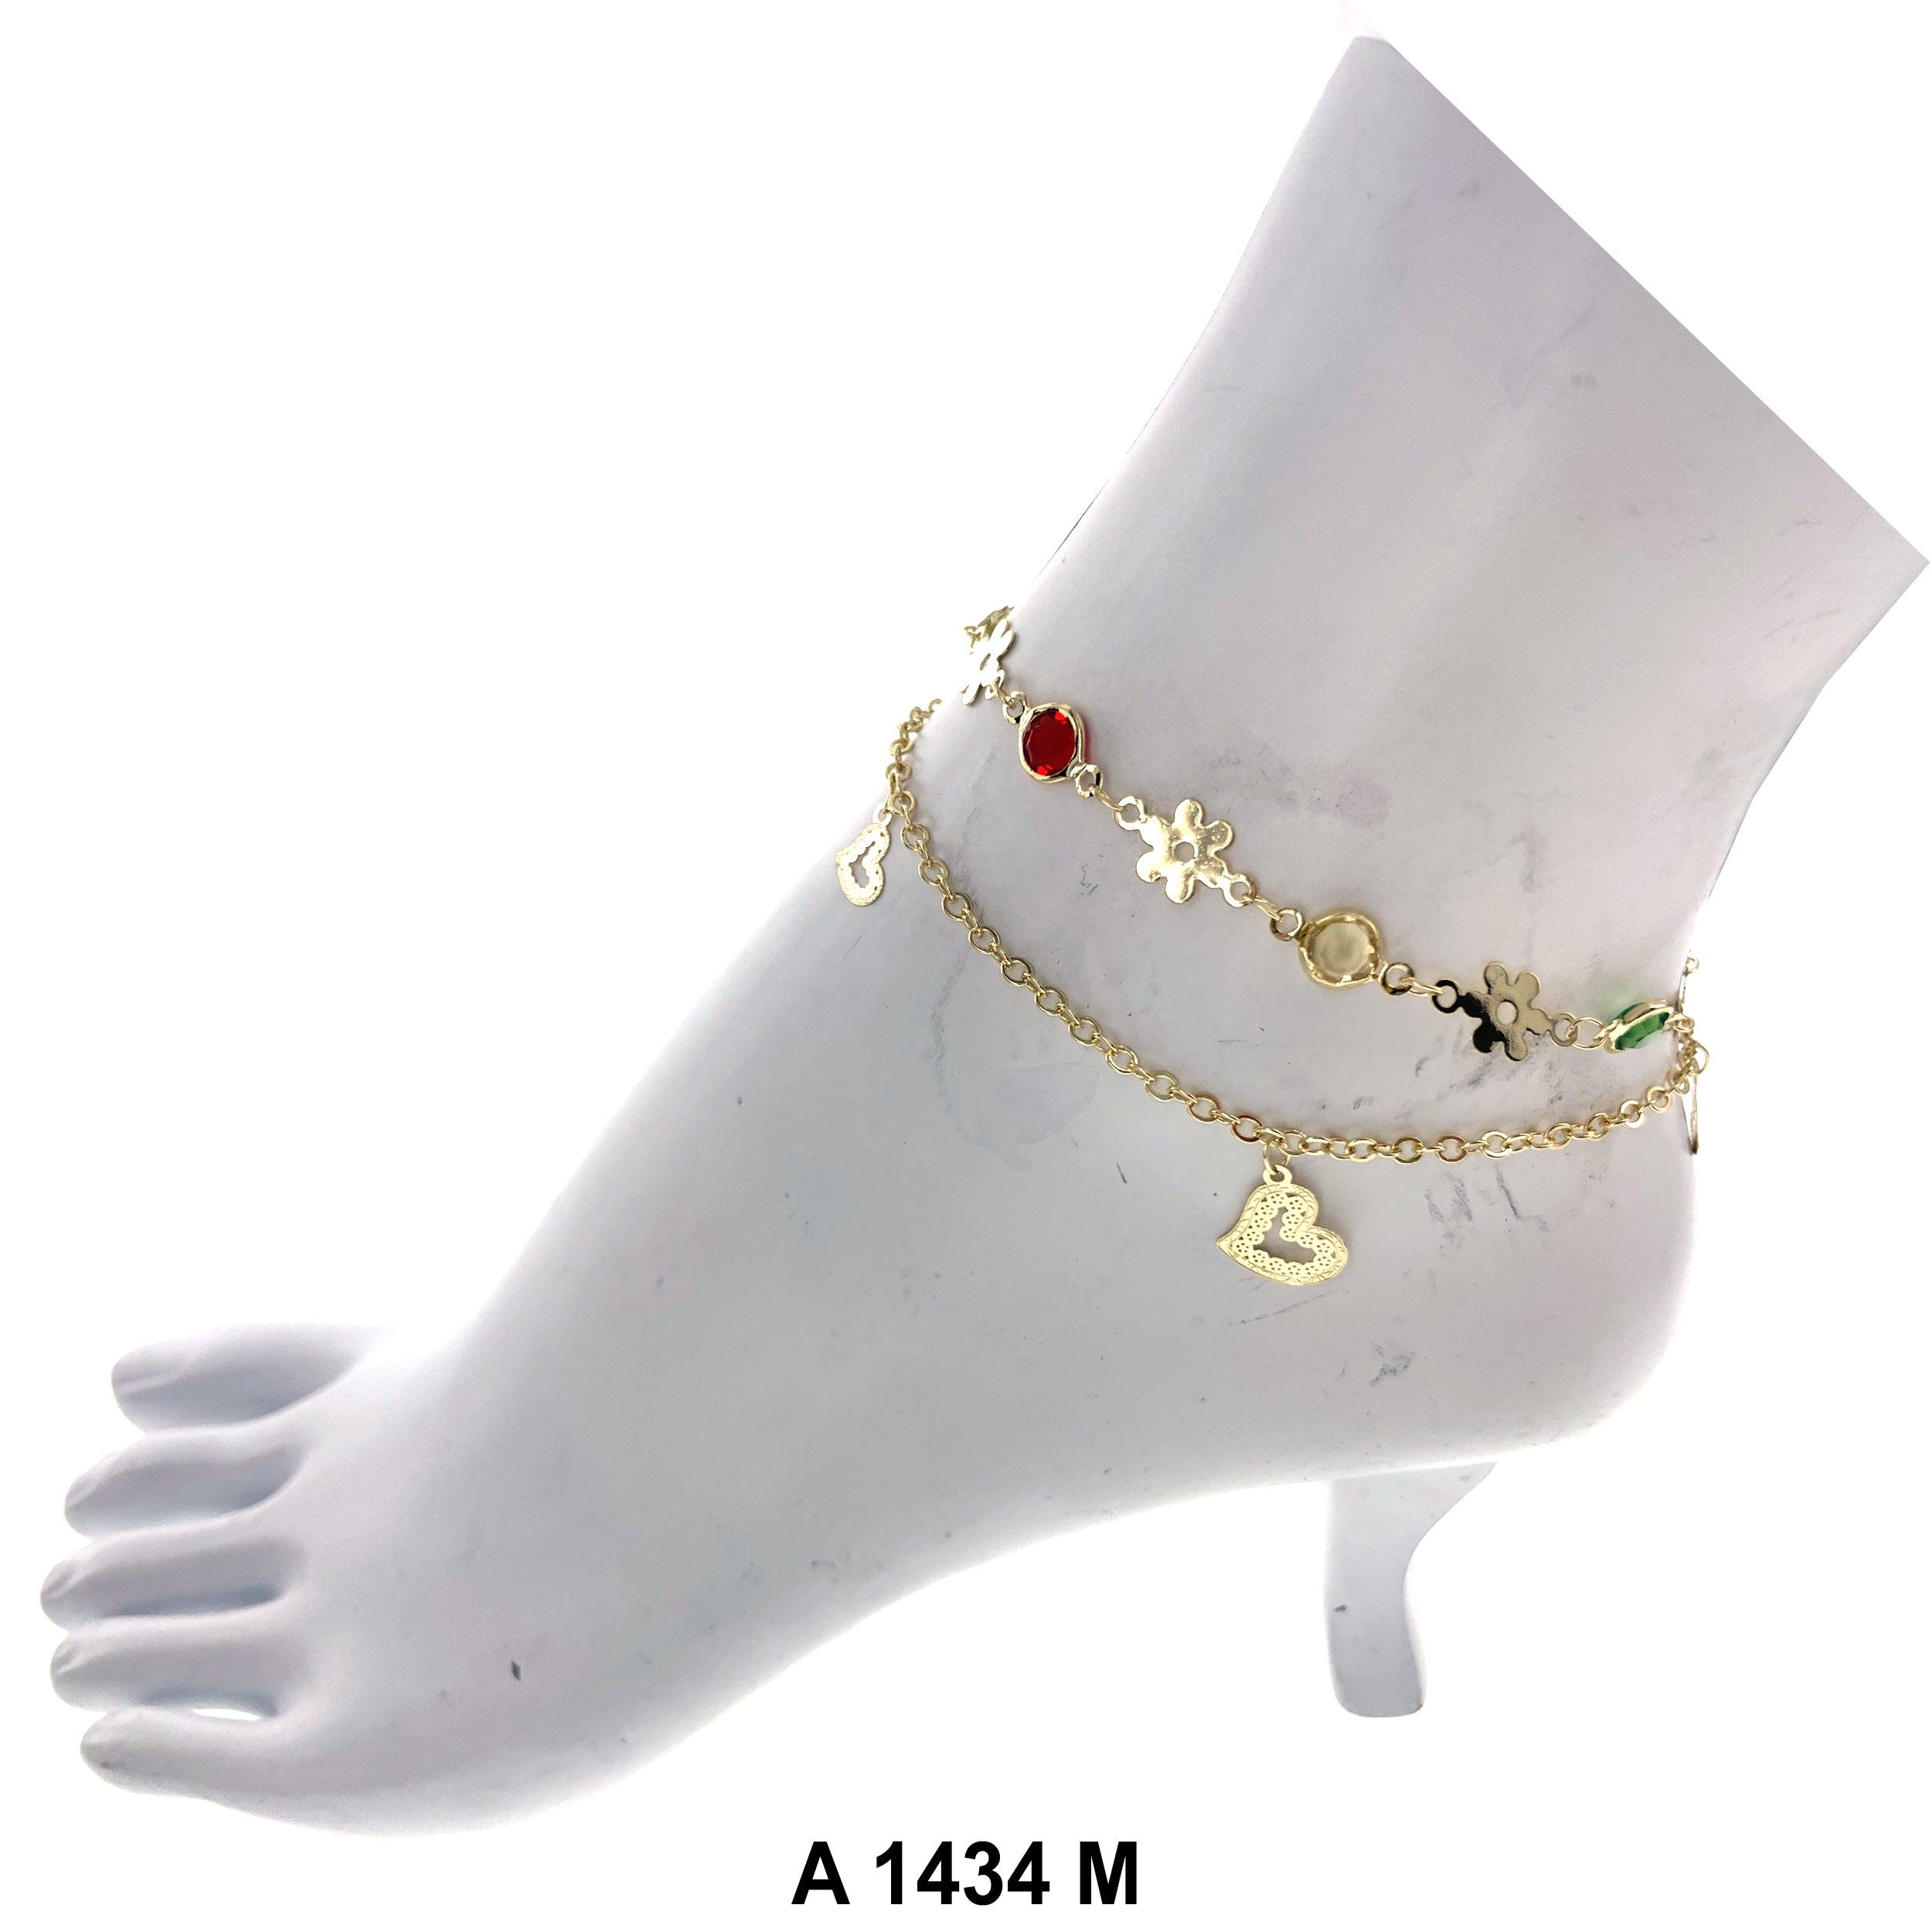 Fashion Anklets A 1434 M